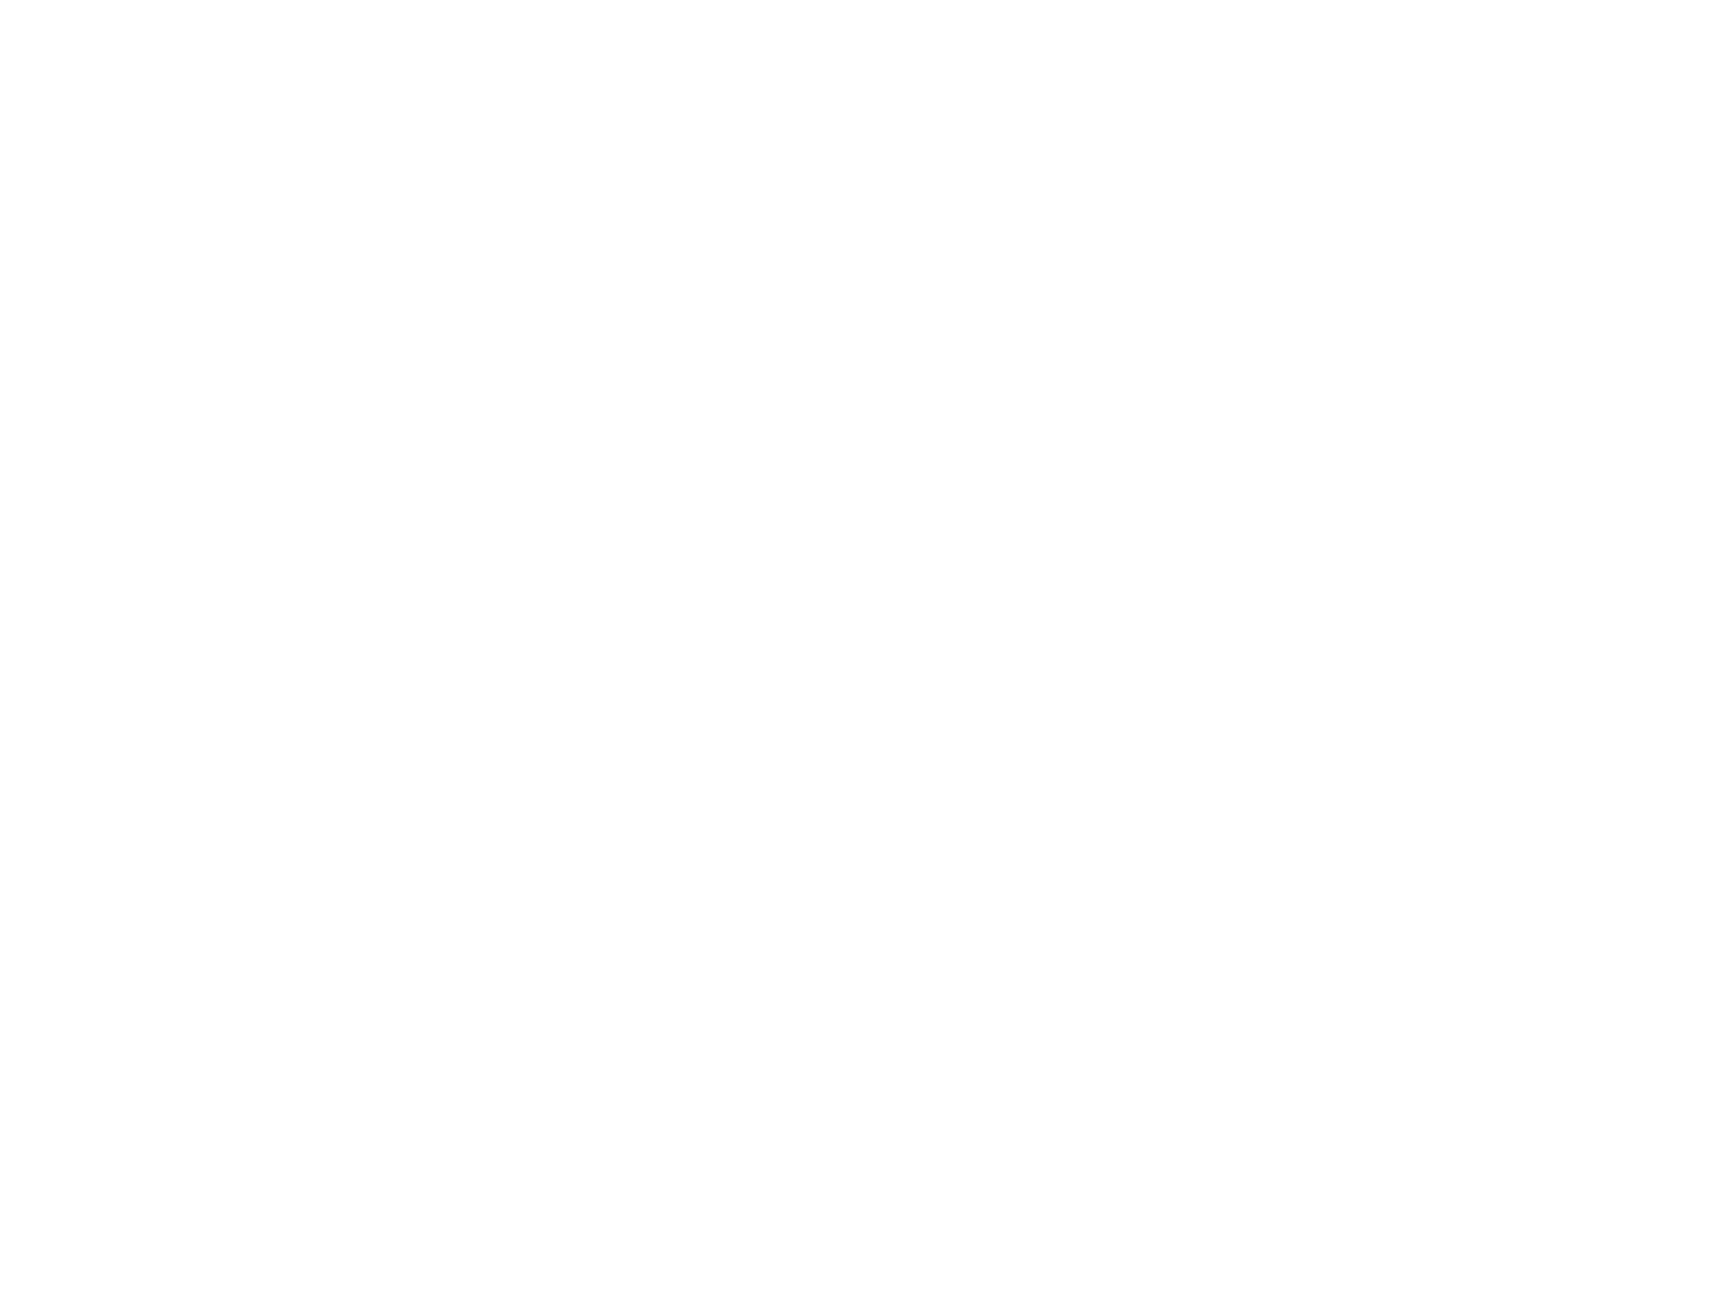 Dr Fareeha